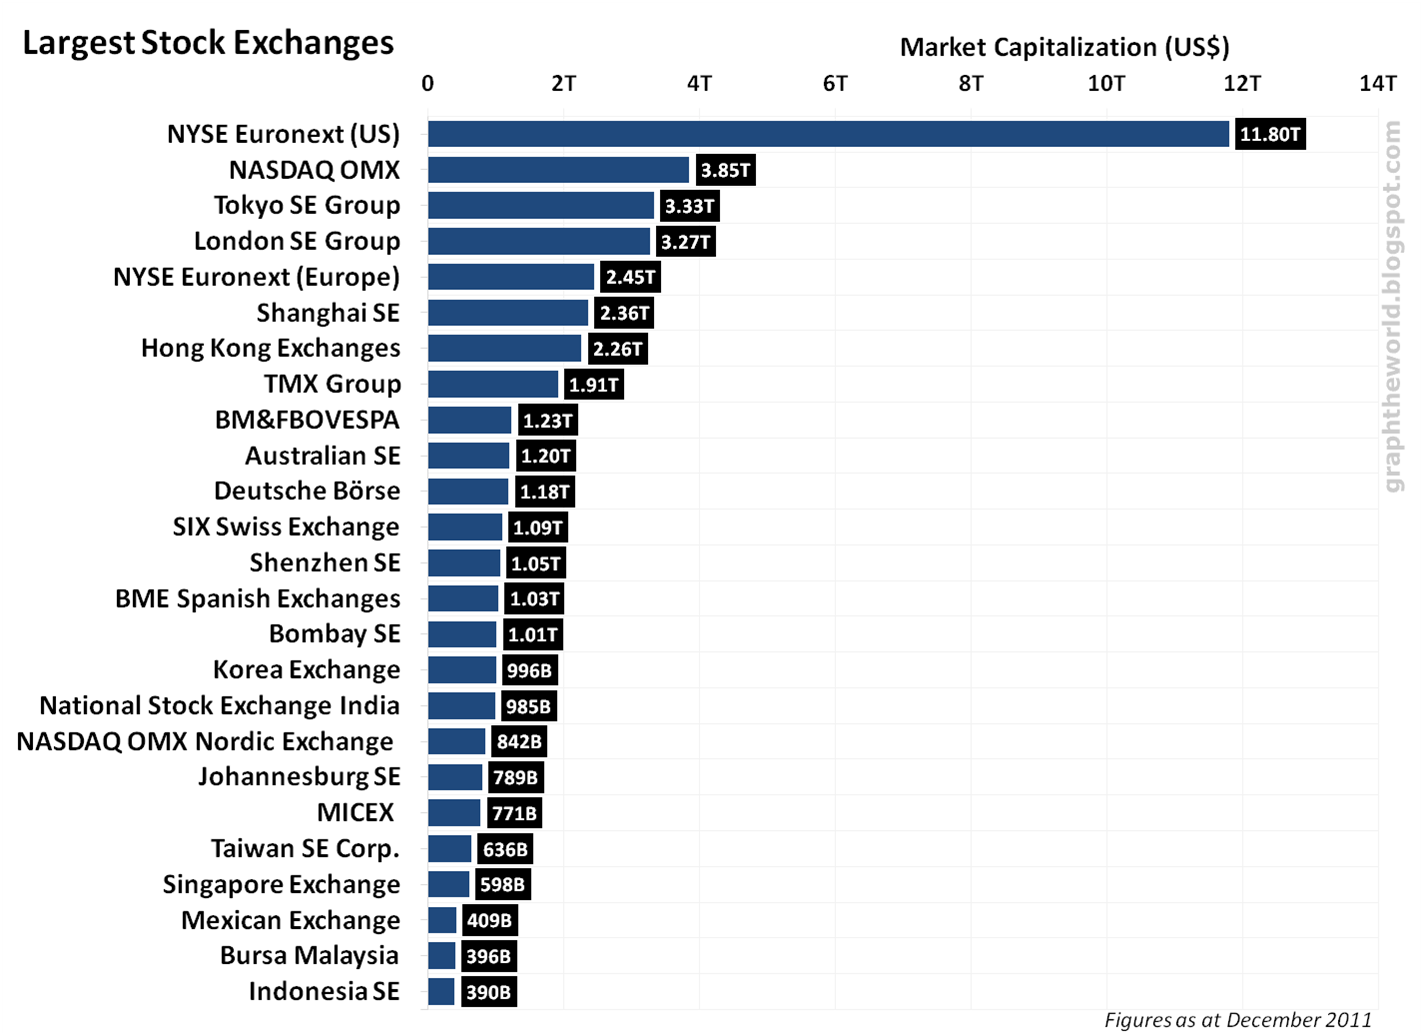 Worlds largest stock exchange by market capitalization, legitimate work